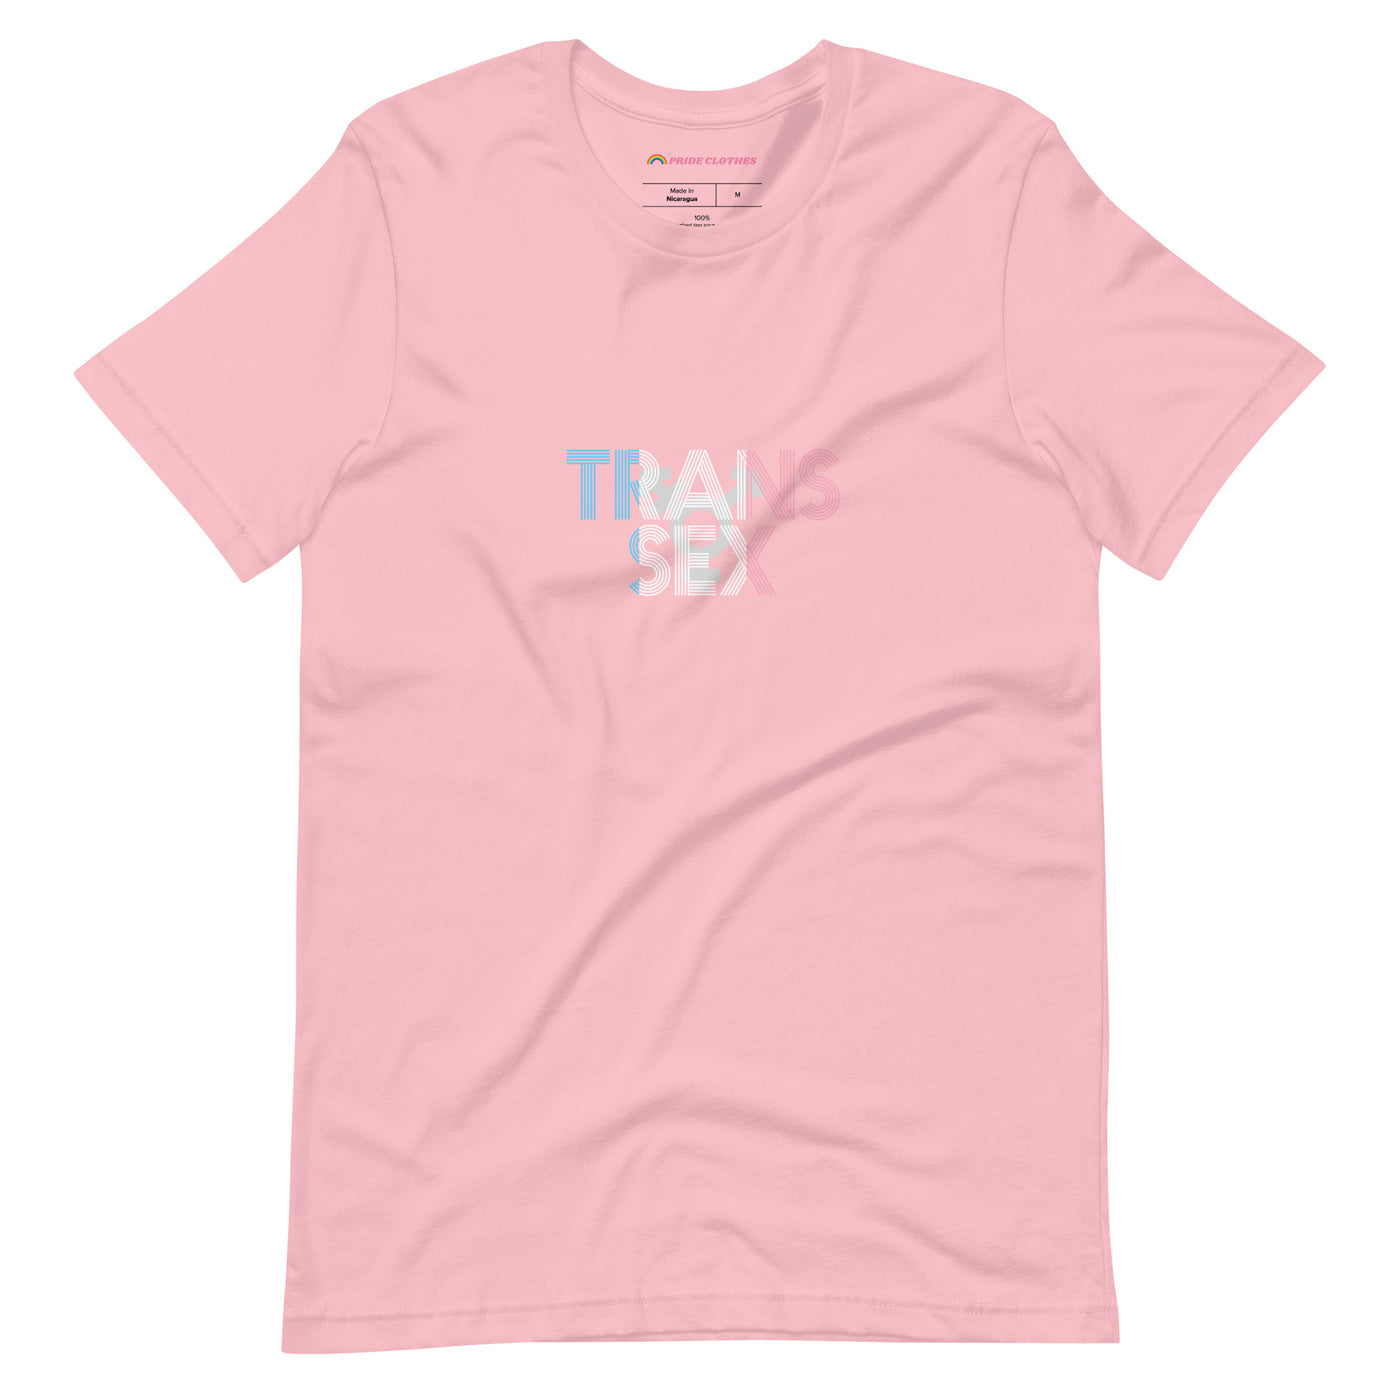 PrideClothes - Transgender Symbol Trans Sex T-Shirt - Pink